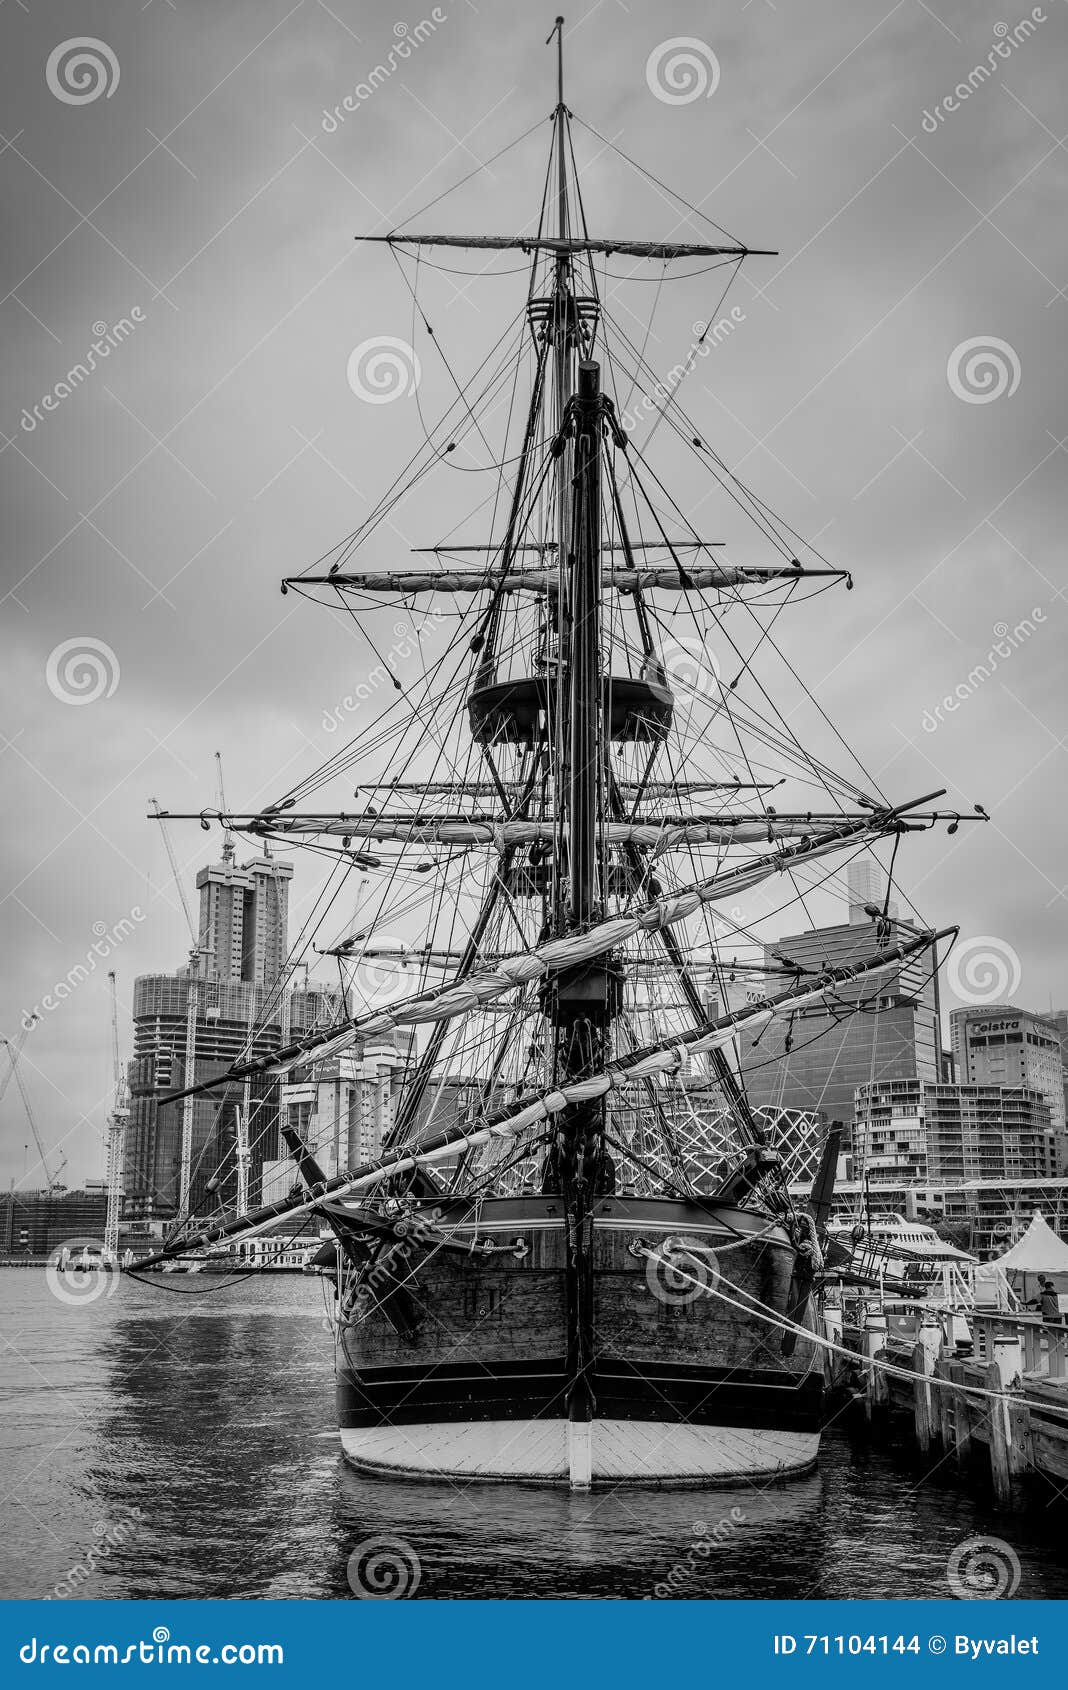 Replica Captain Cook Endeavour ship Boston England Limited edition 1994 photograph print The Endeavour Photograph